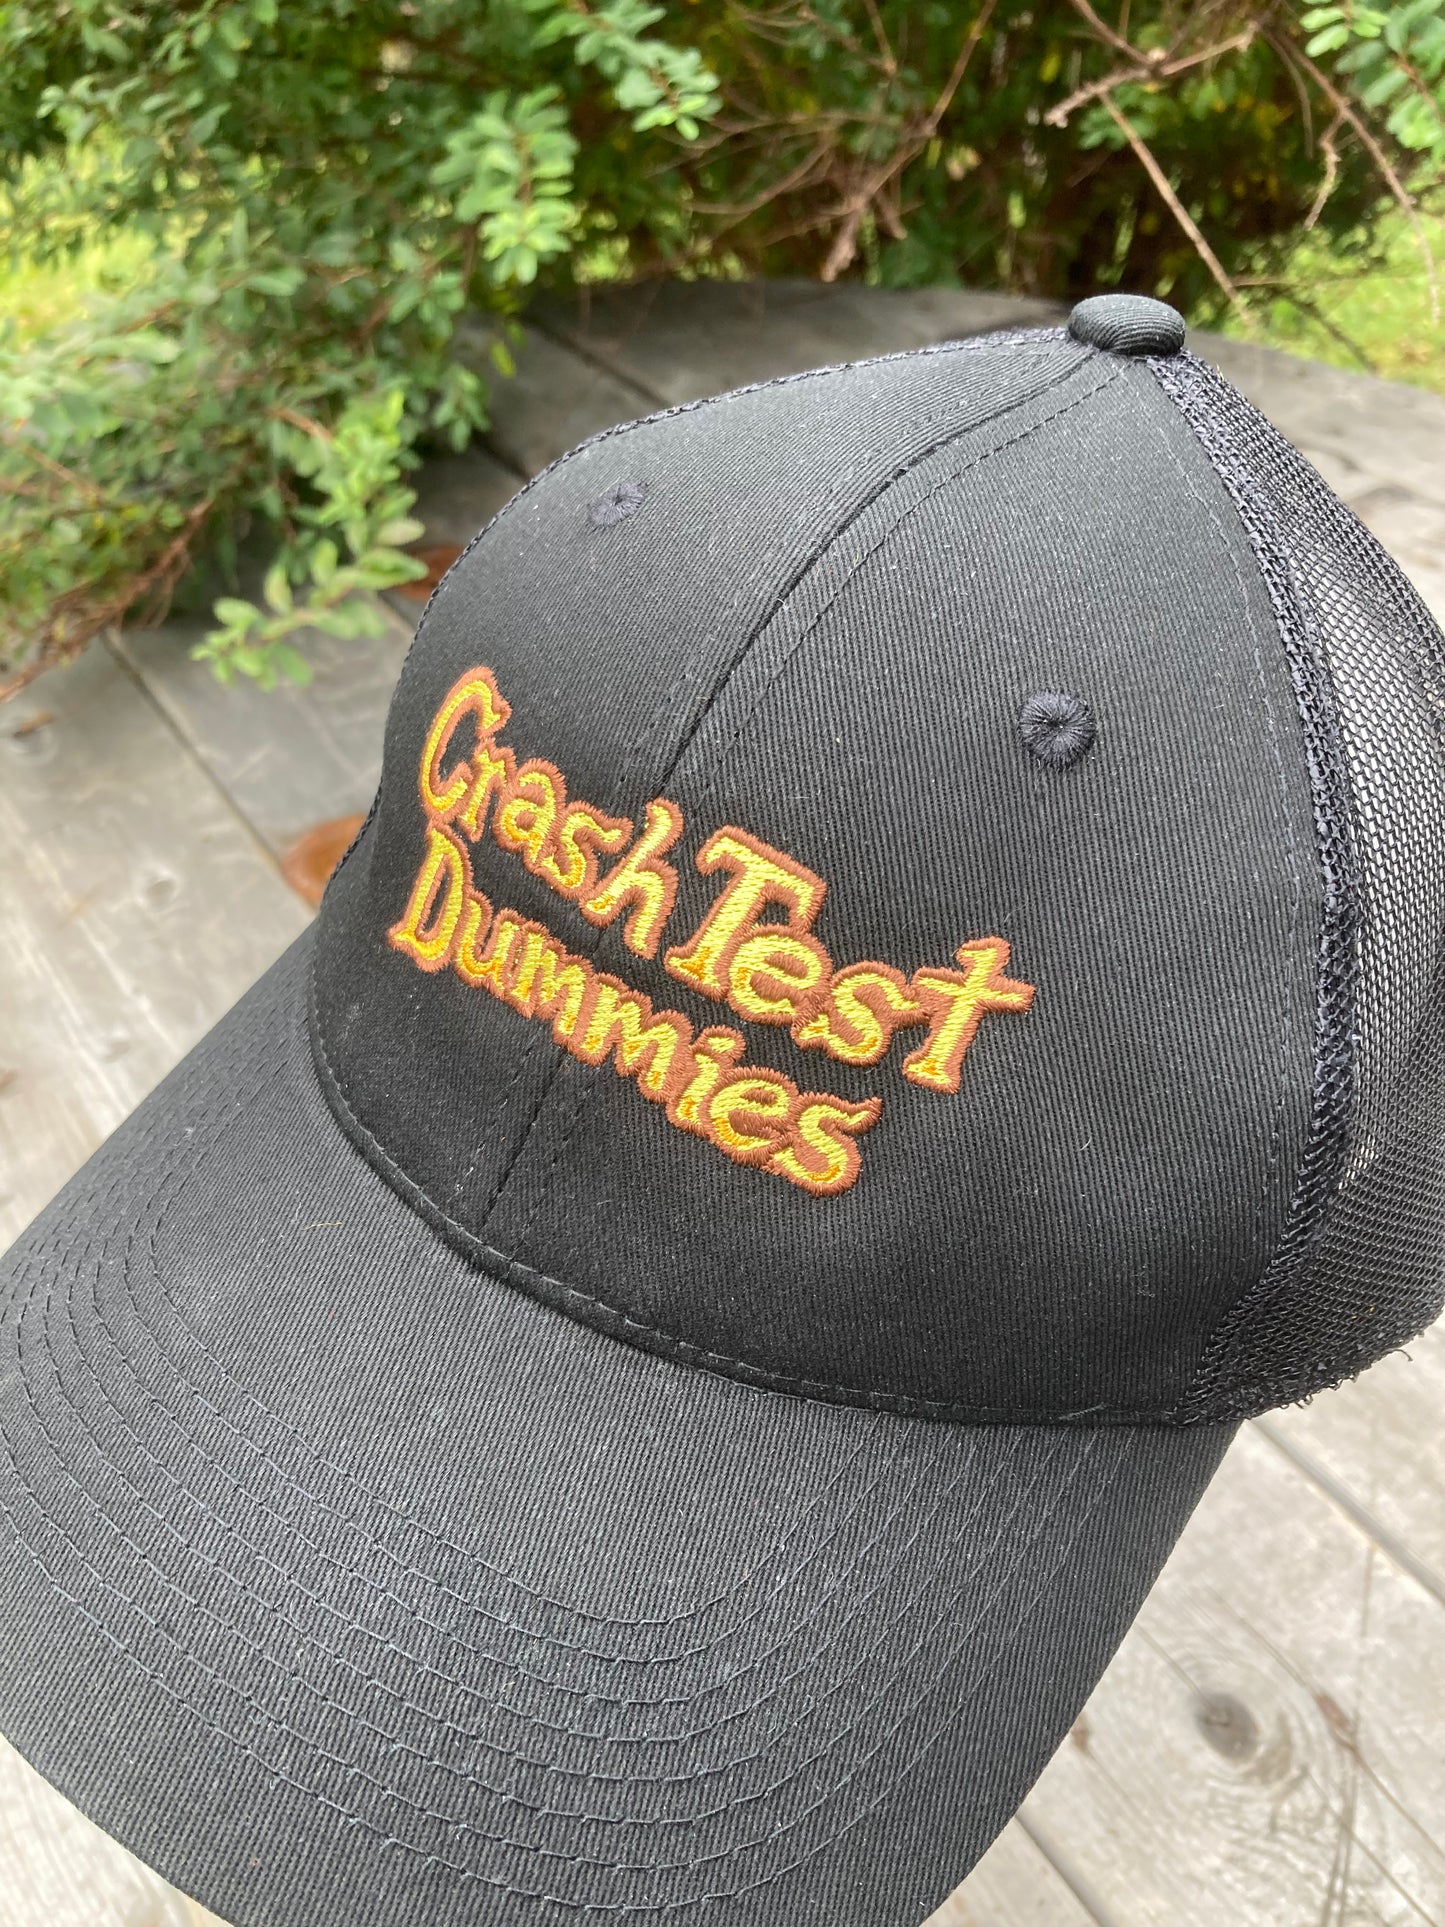 Embroidered Retro Trucker Hat Mesh Back (Black)